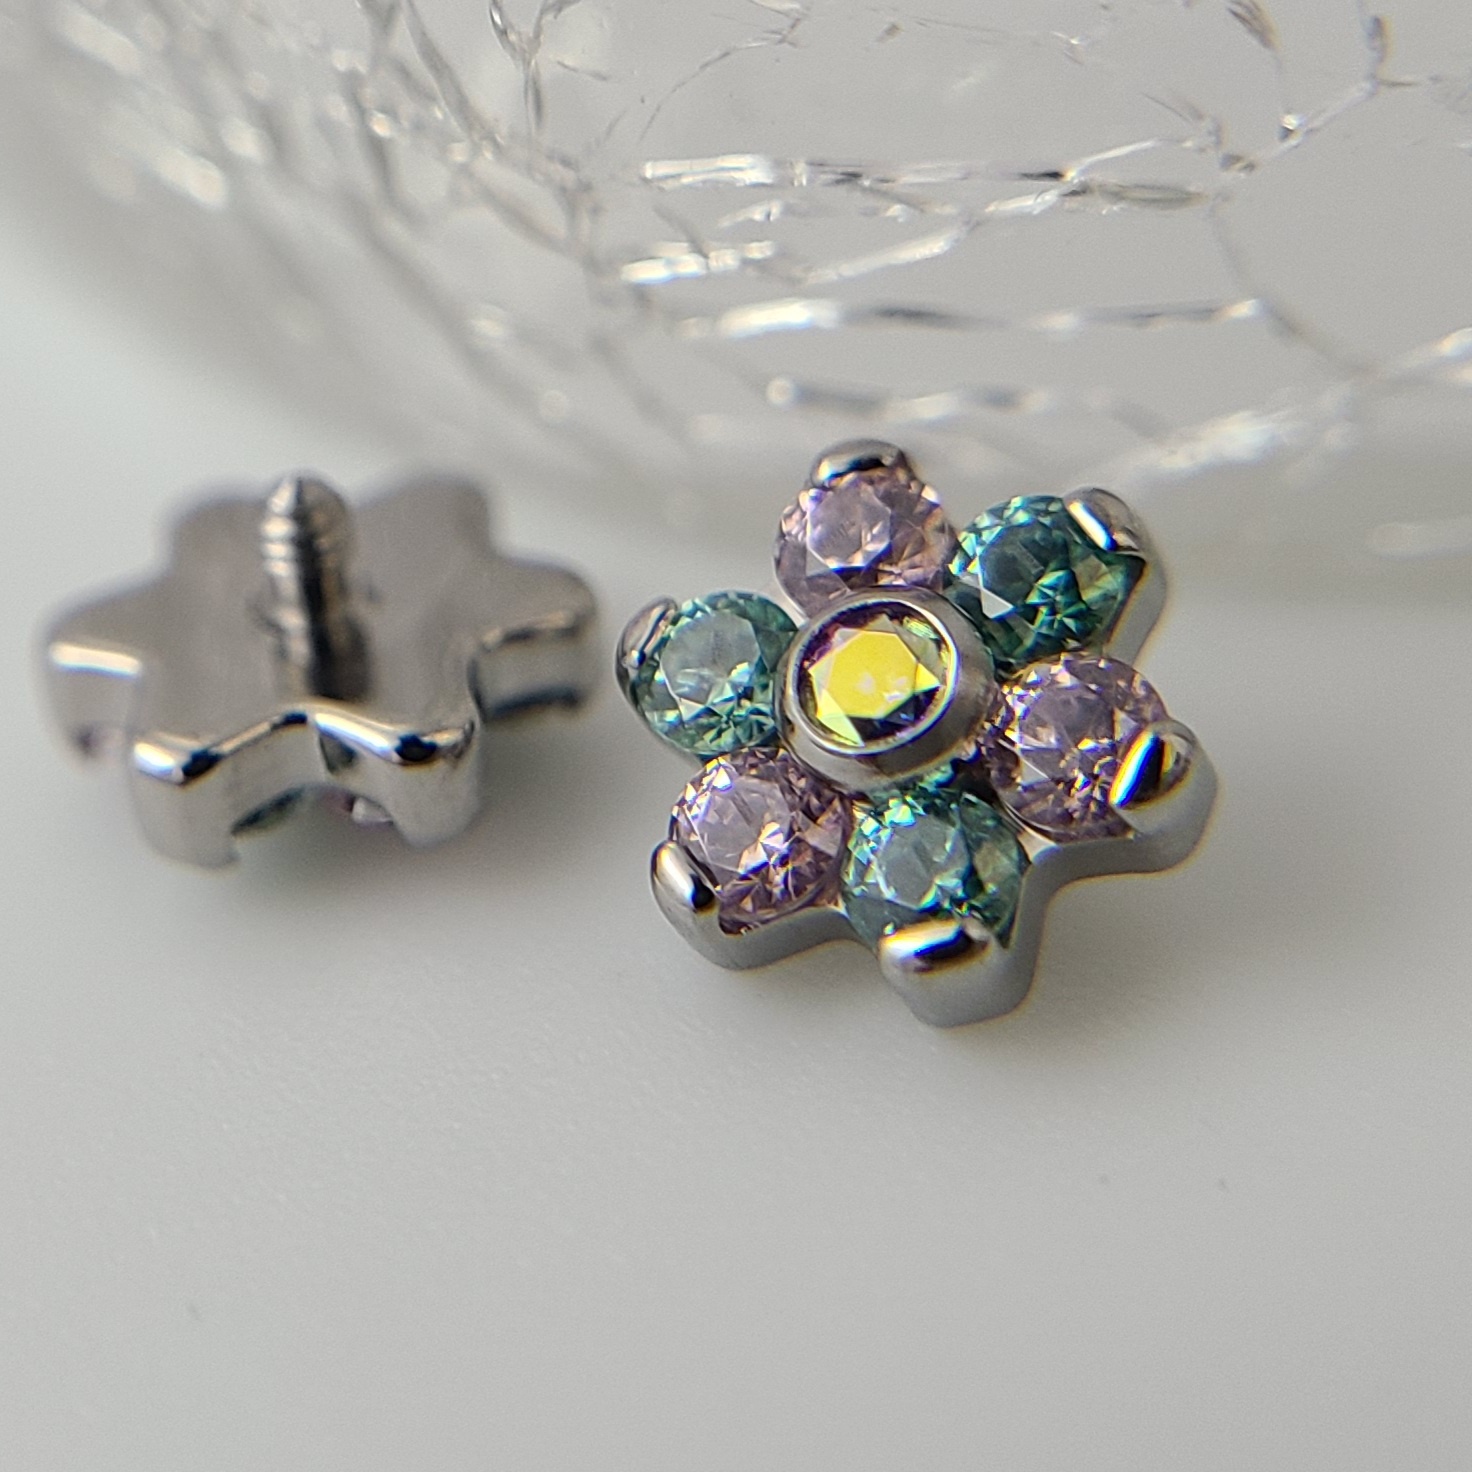 Gem Flower in Titanium - 2.0mm gems - 14g Threaded-4